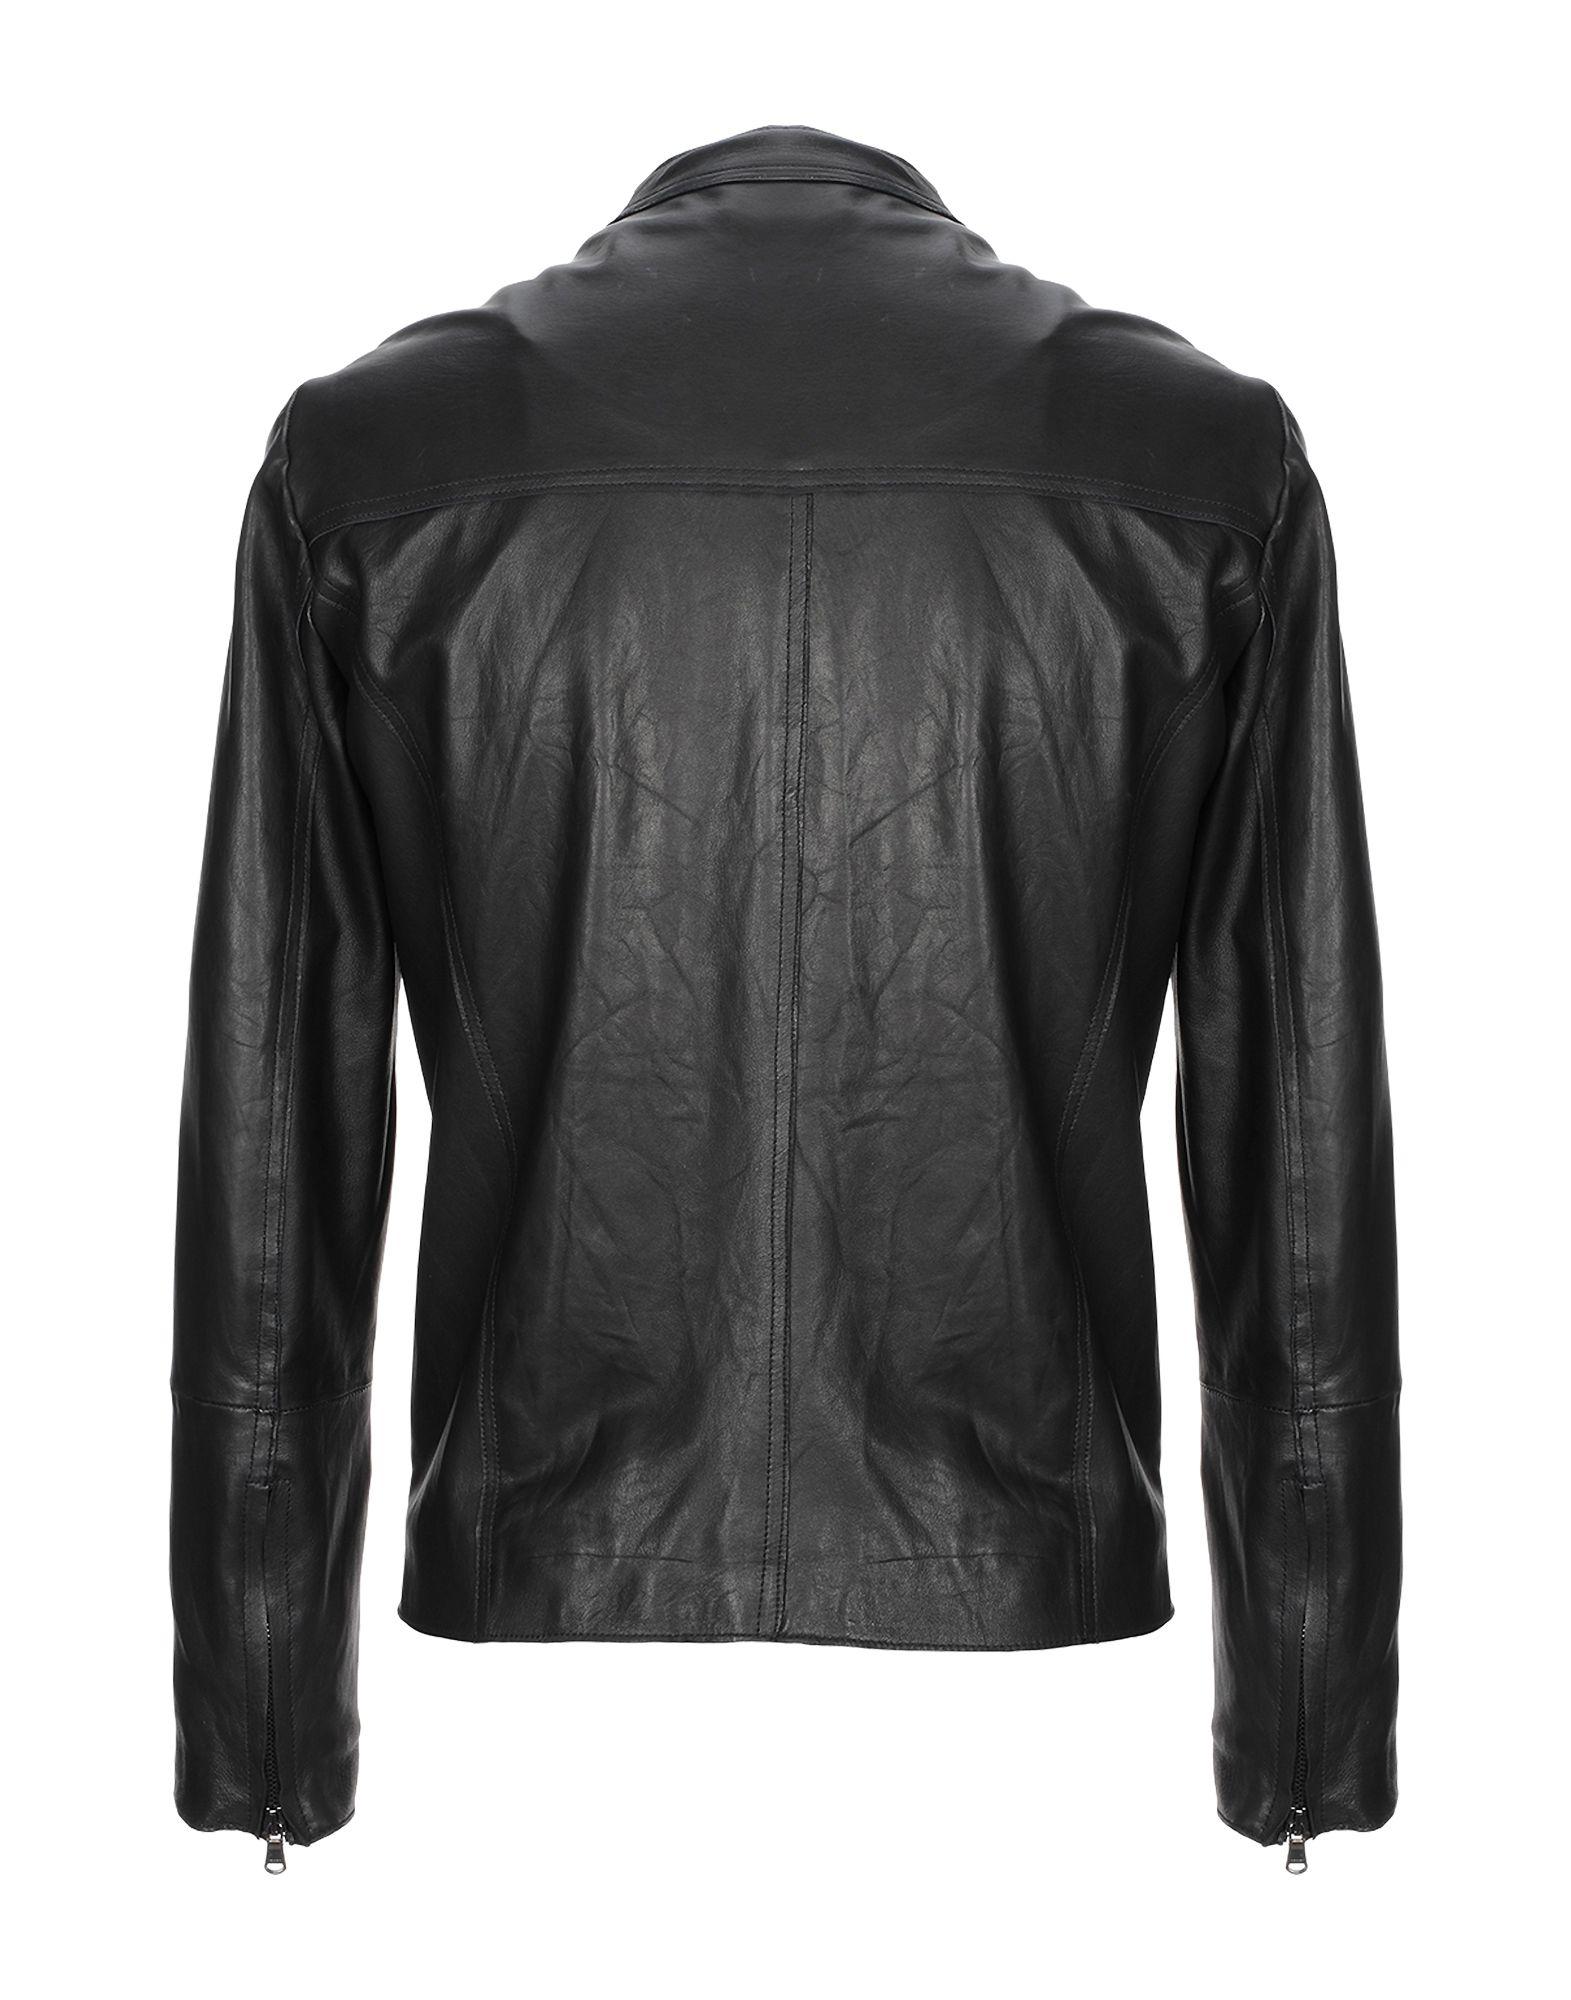 Fradi Jacket in Black for Men - Lyst